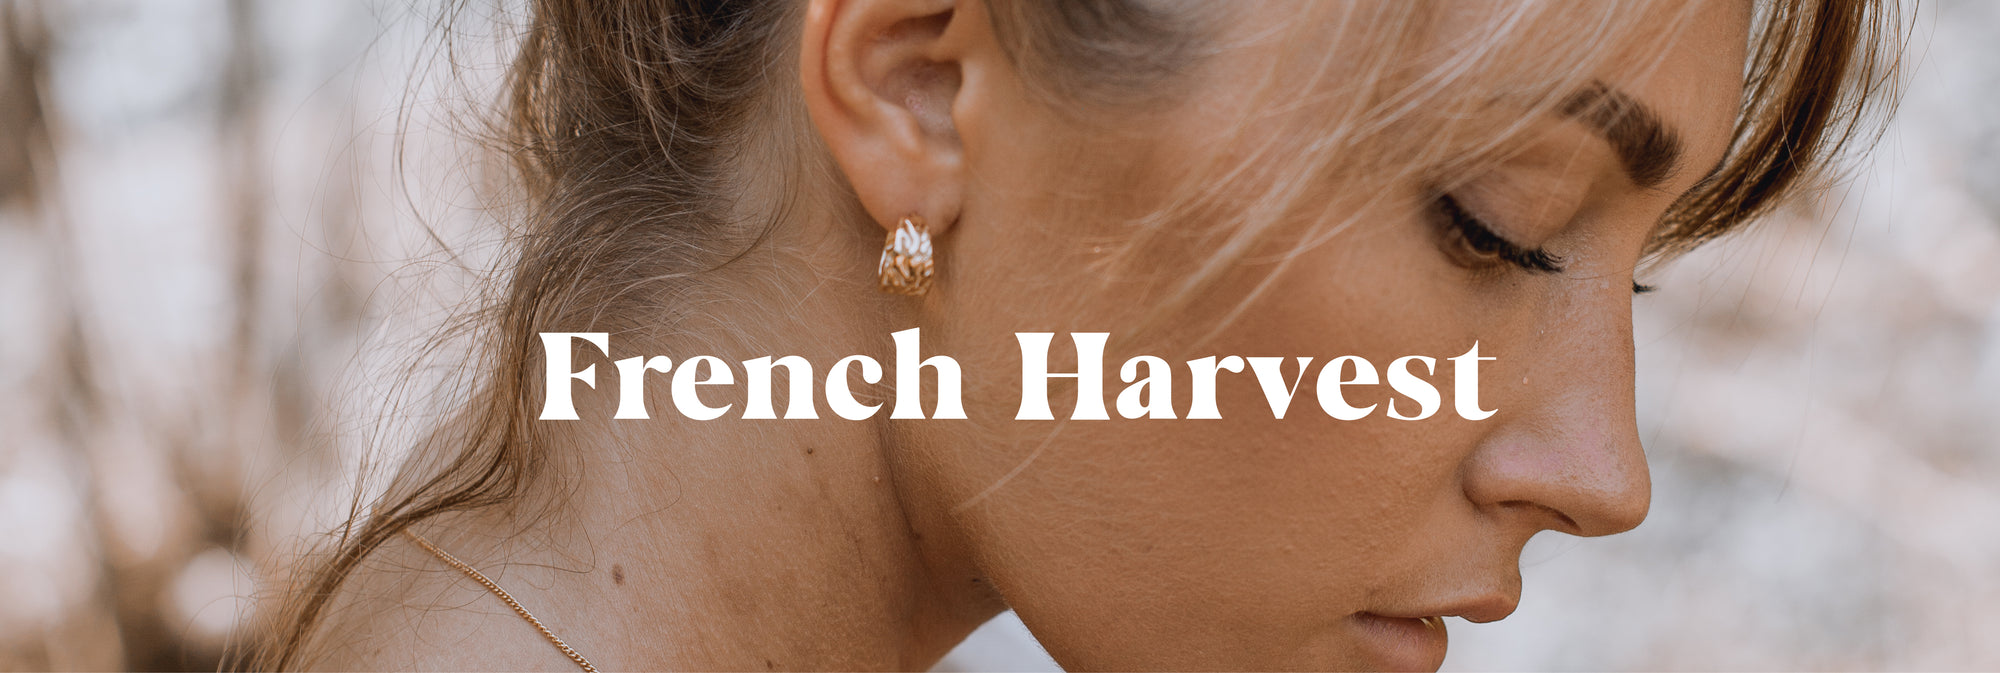 FRENCH HARVEST